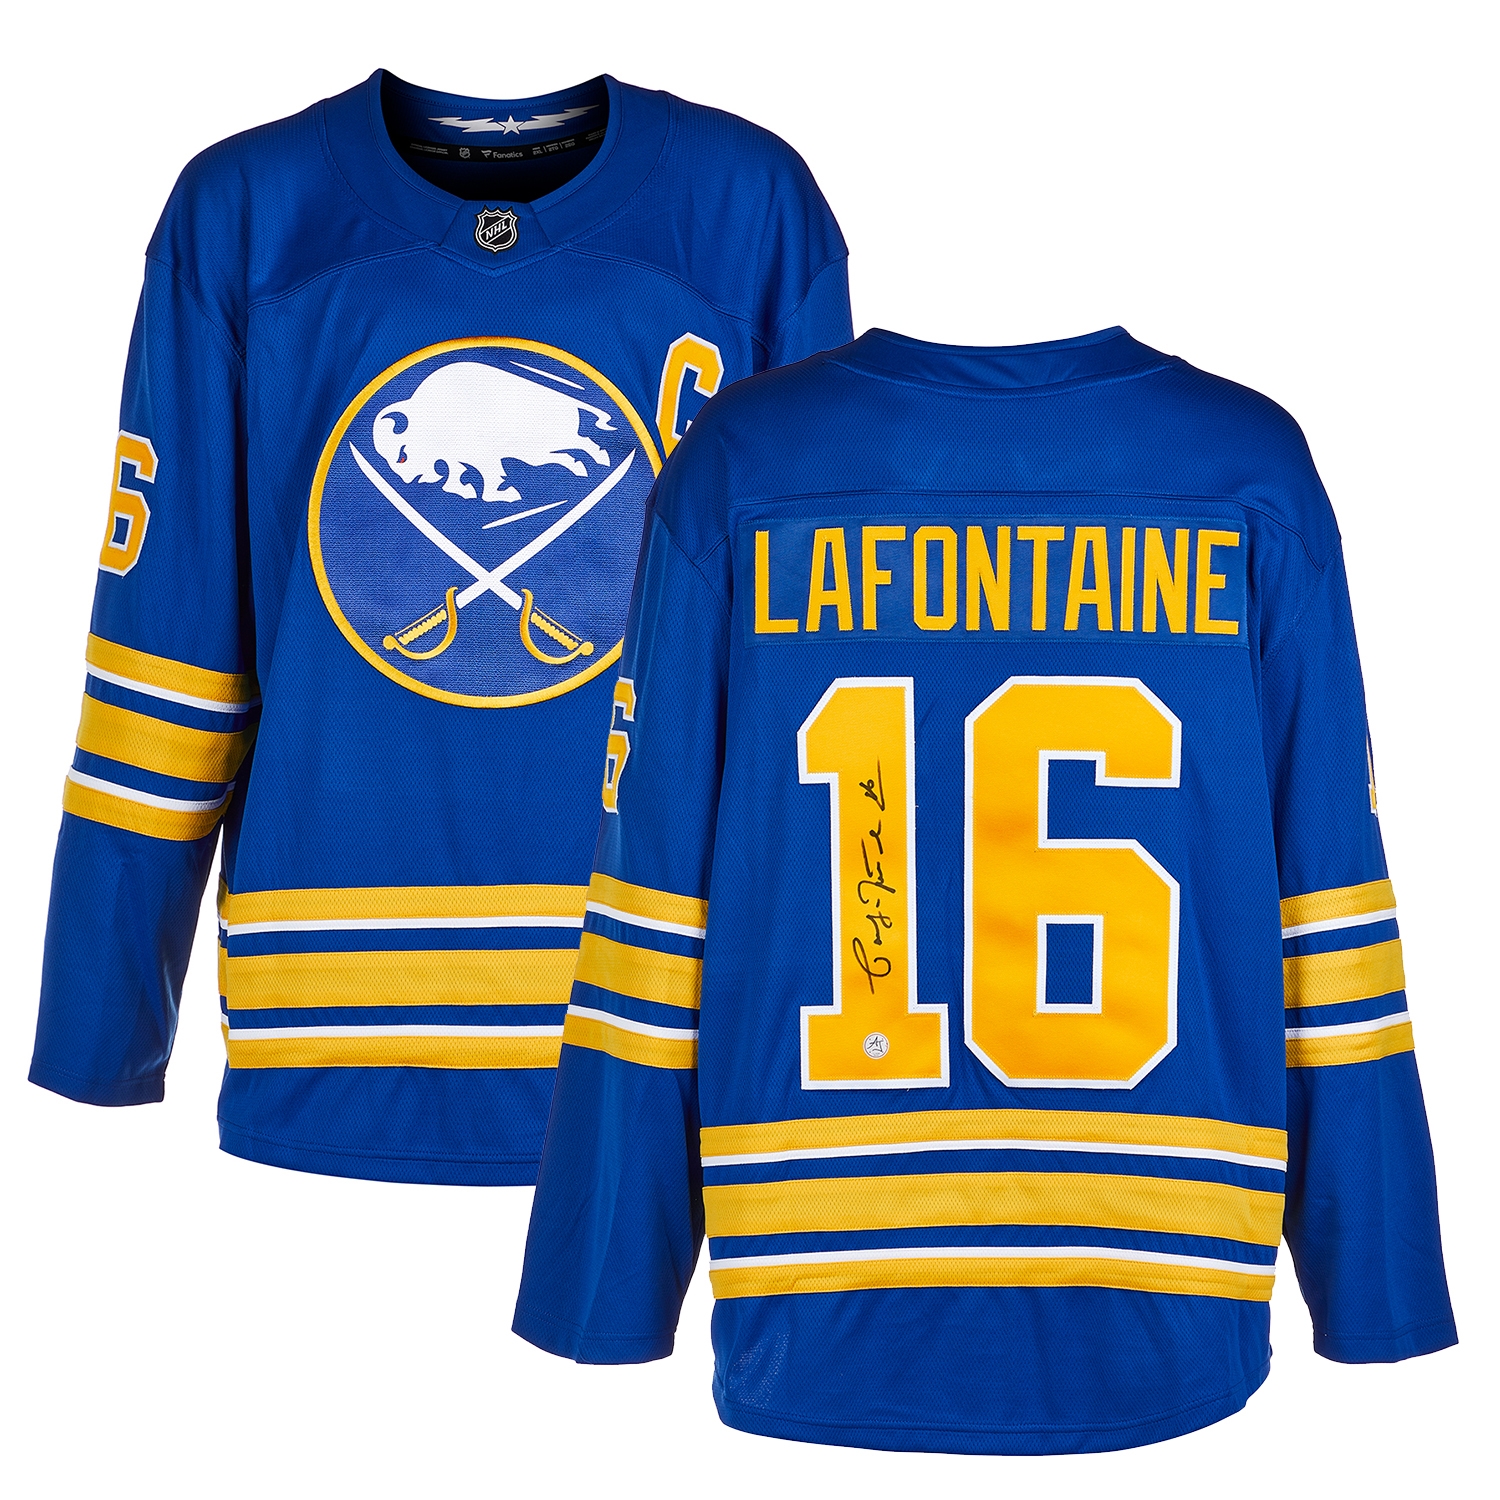 Pat LaFontaine Autographed Buffalo Sabres Fanatics Jersey